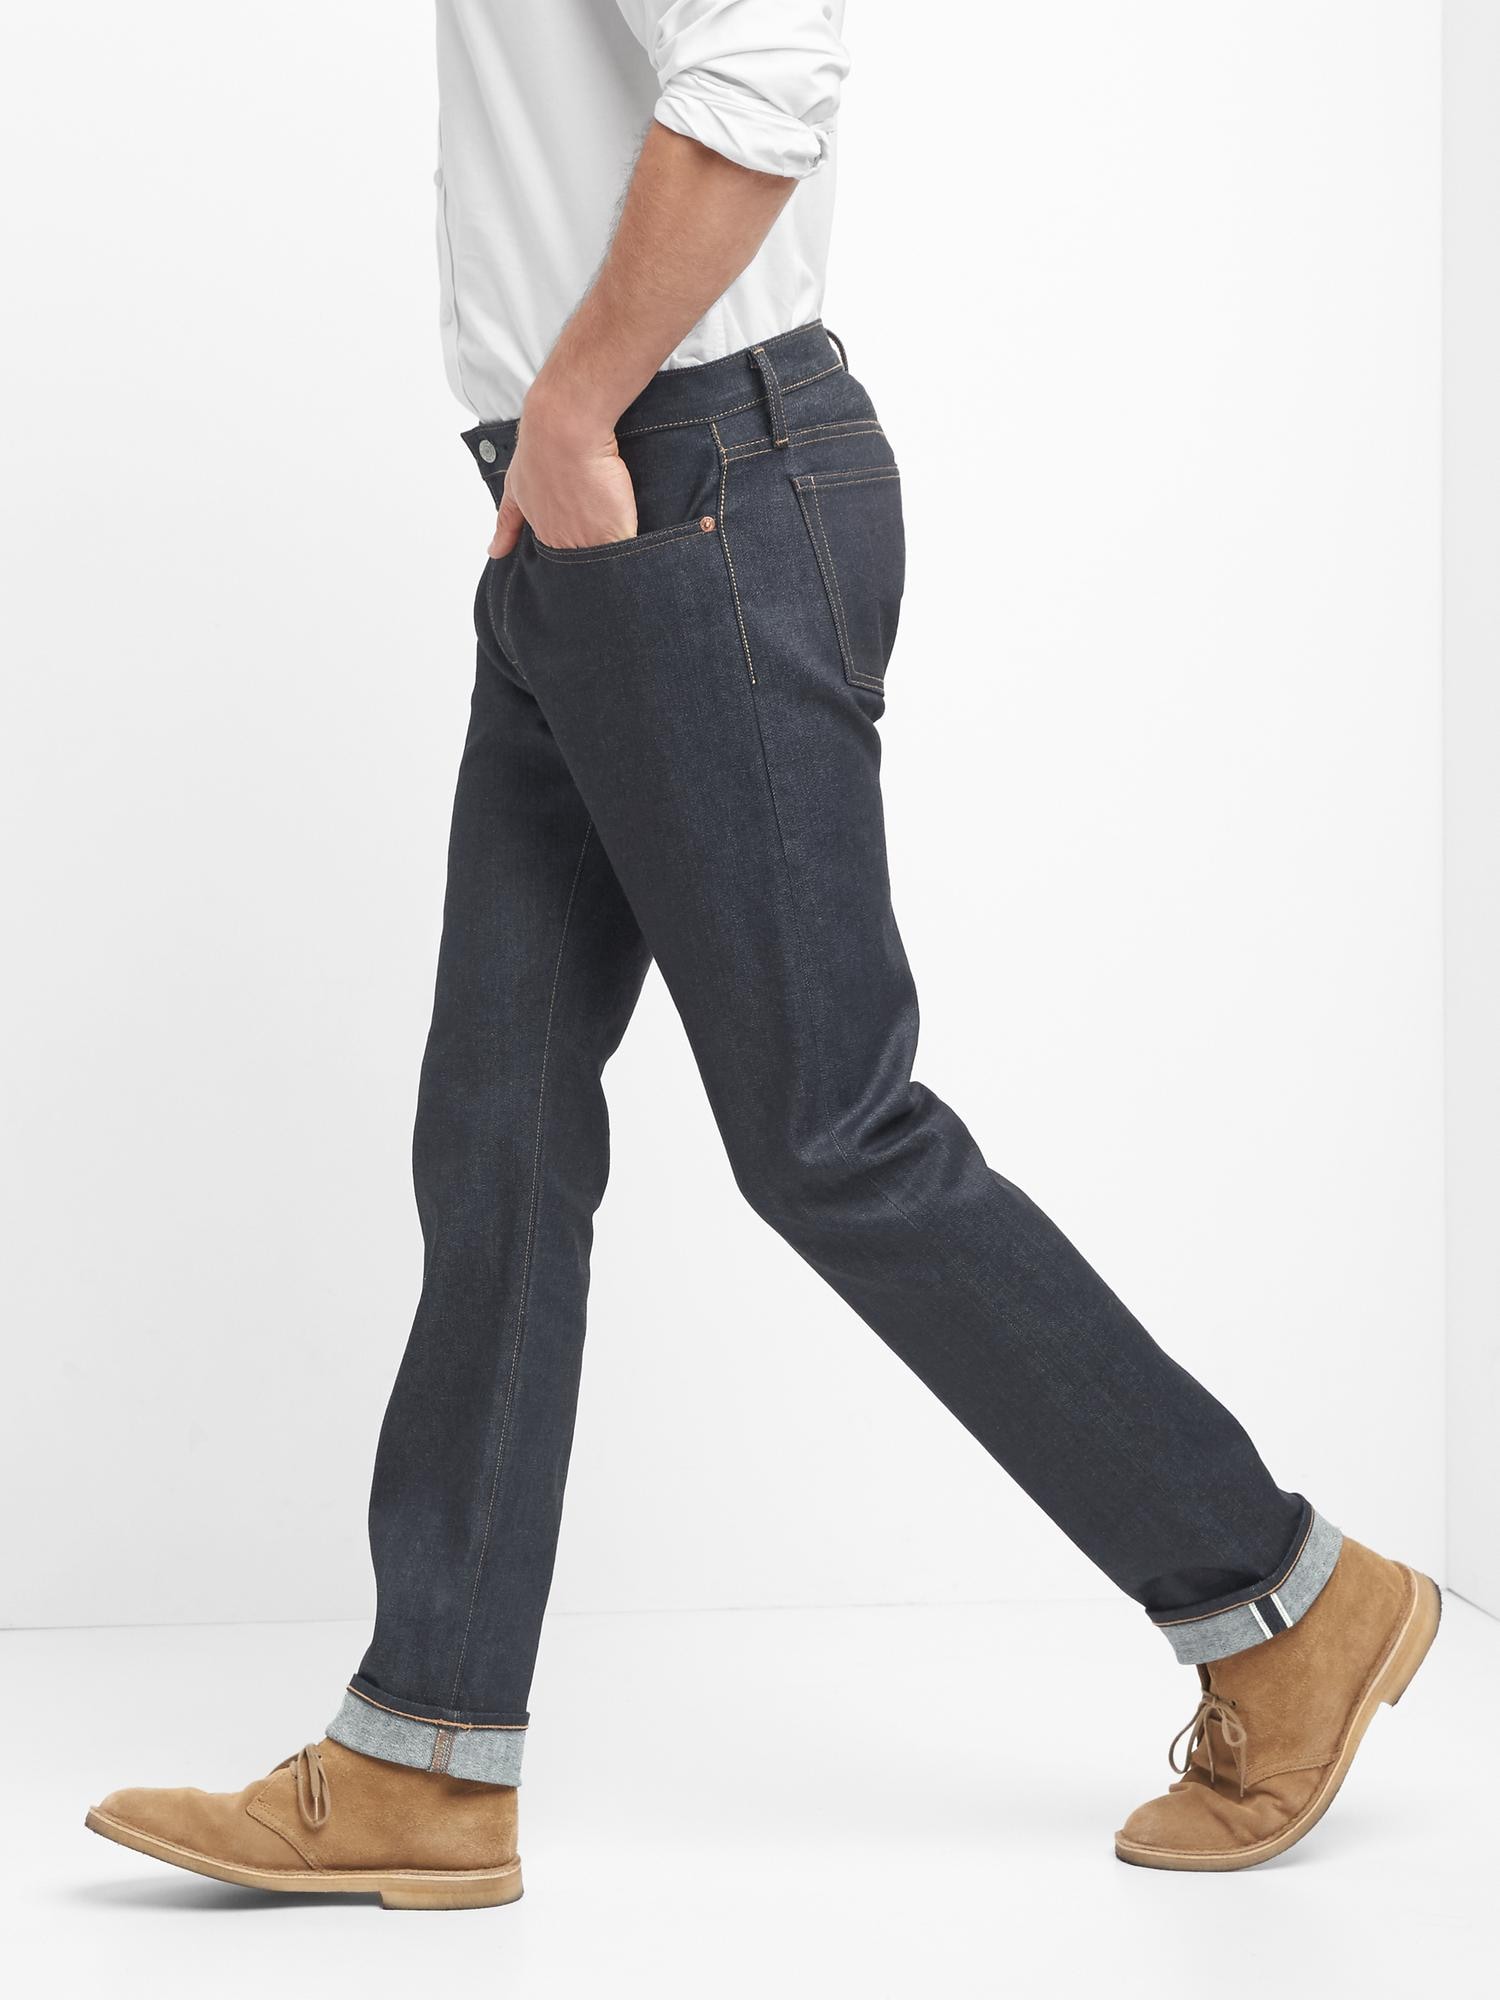 Limited-Edition Cone Denim® Selvedge Slim Jeans with GapFlex